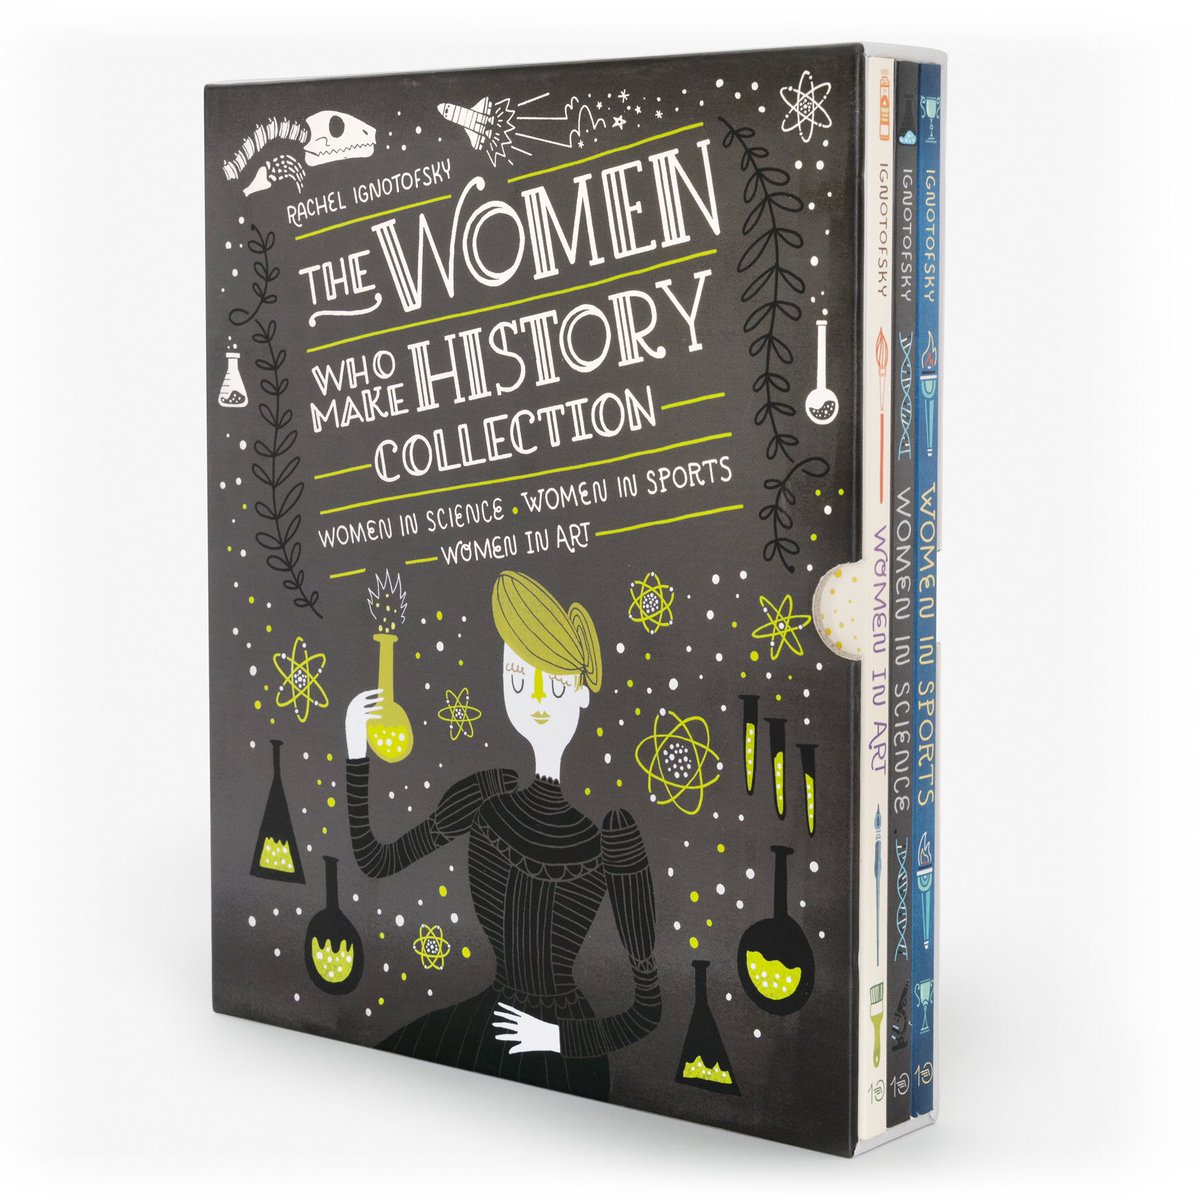 ✨New Release✨ The Women who Make History Box Set! rachelignotofskydesign.com/boxset